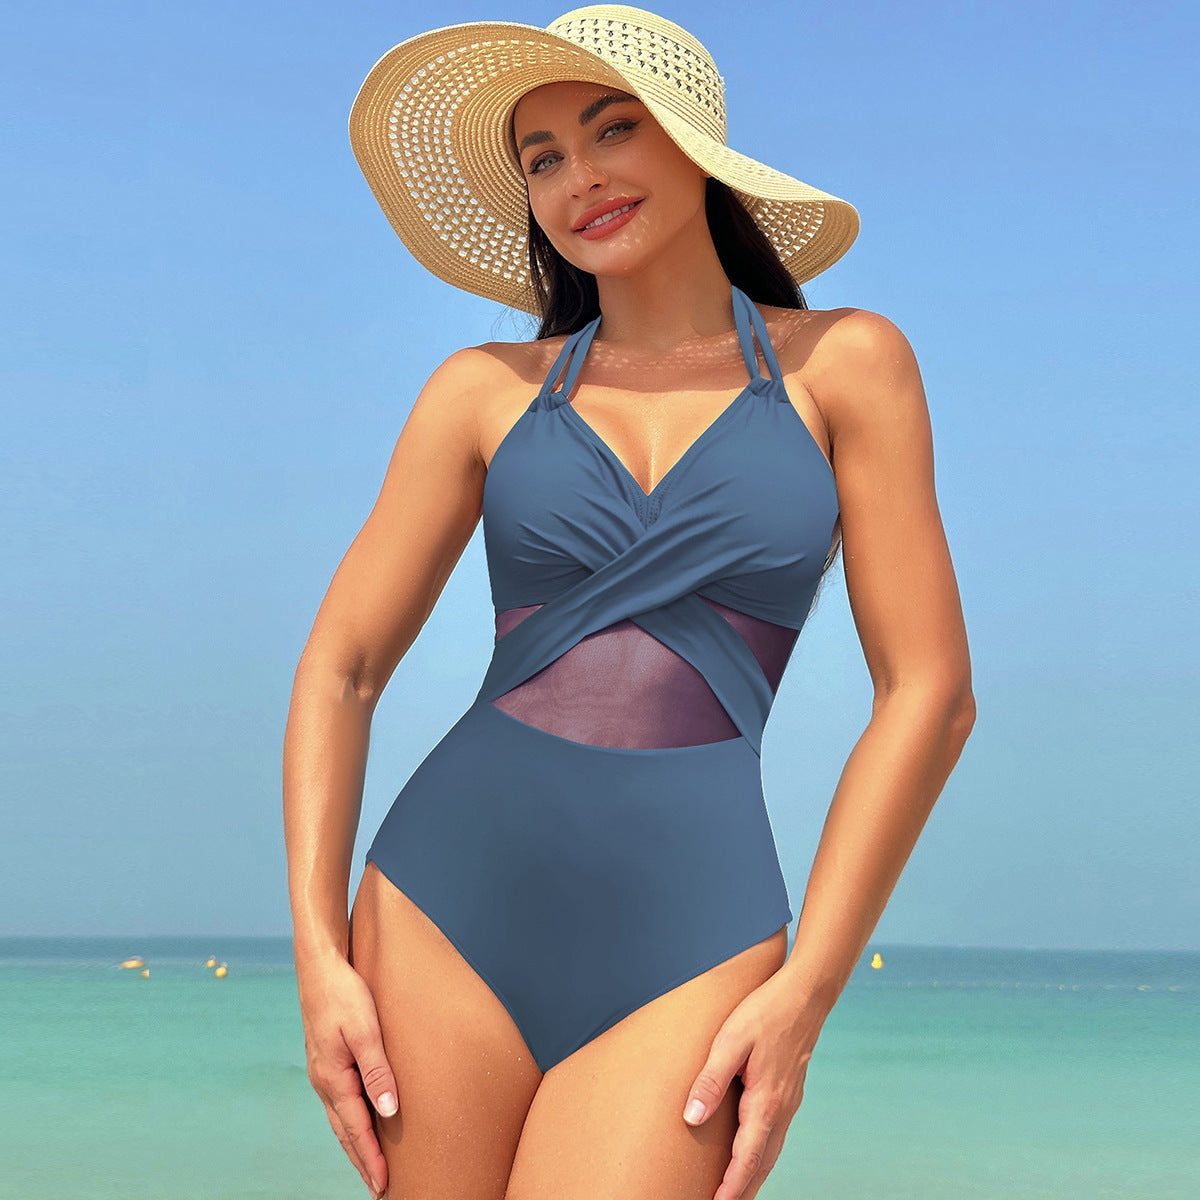 BeachGlam Swimsuit - Elegant Halter-Neck One-Piece Swimsuit